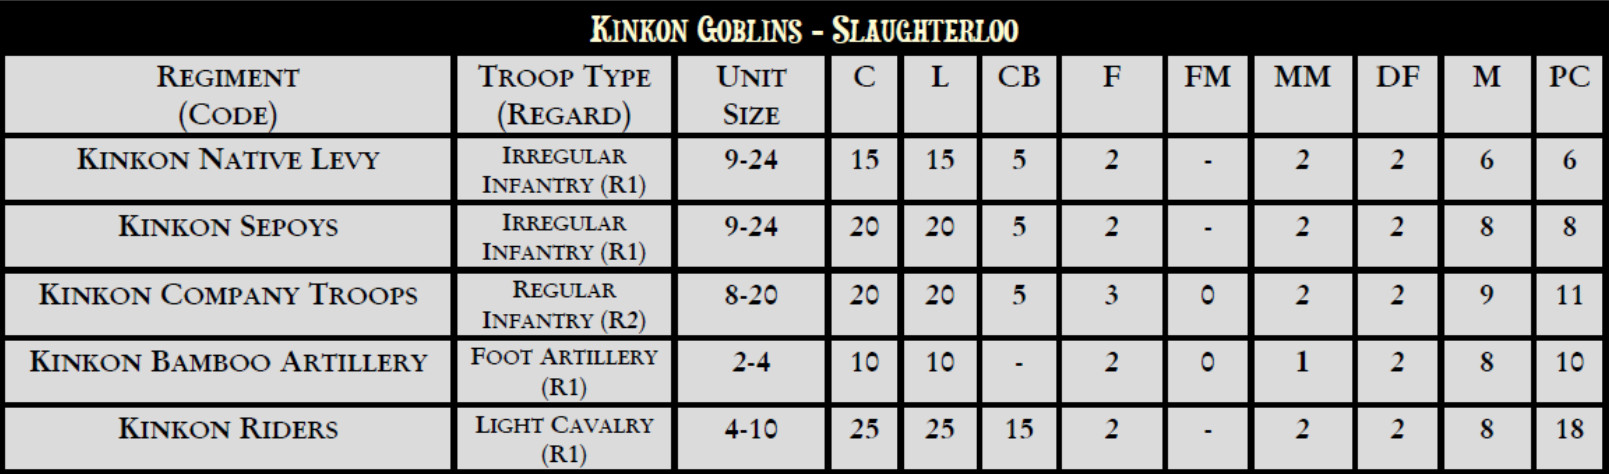 kinkon-goblins-stats